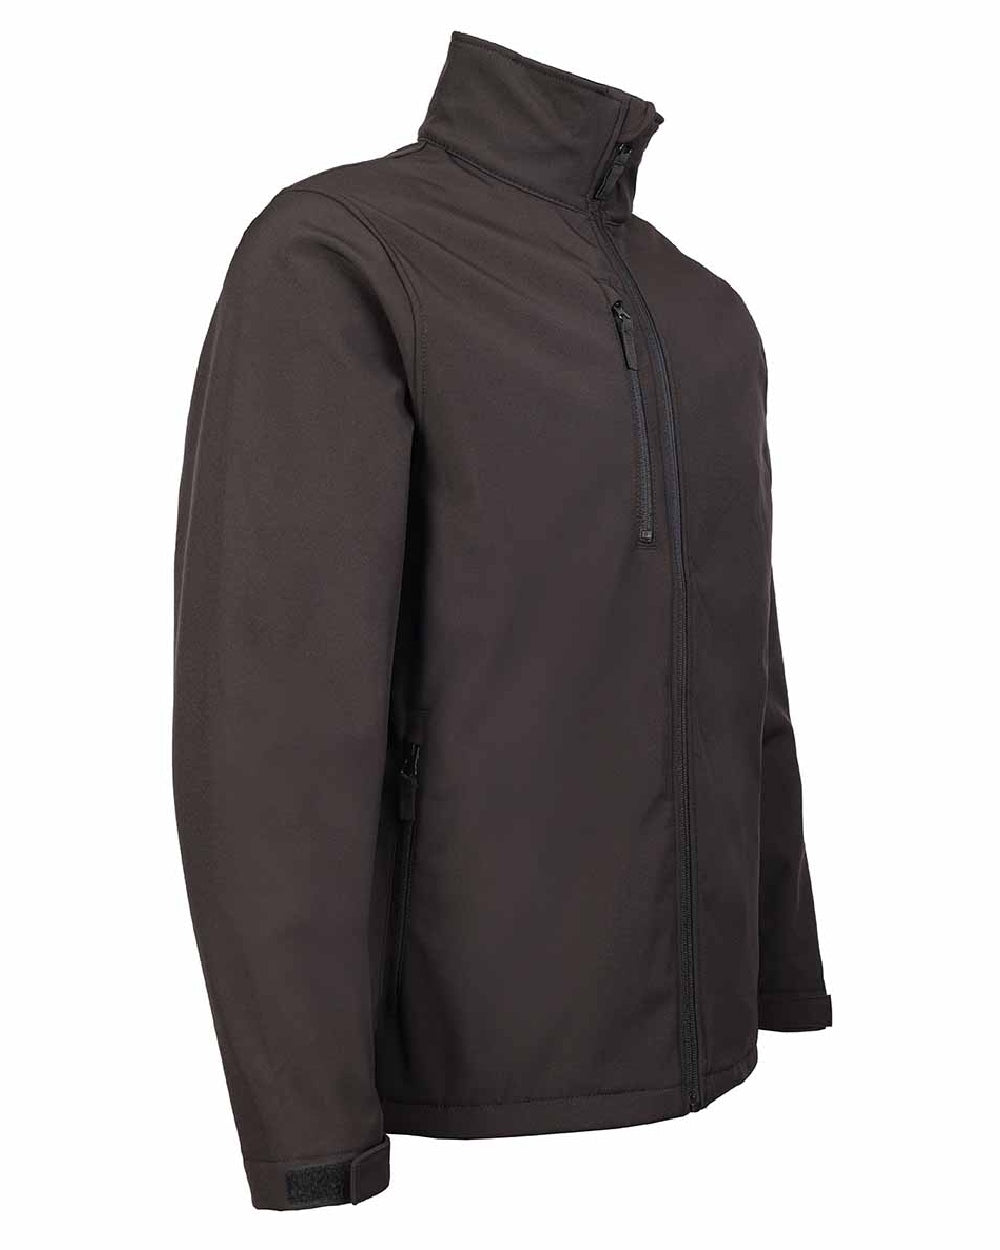 Black coloured Fort Selkirk Softshell Waterproof Jacket on white background 